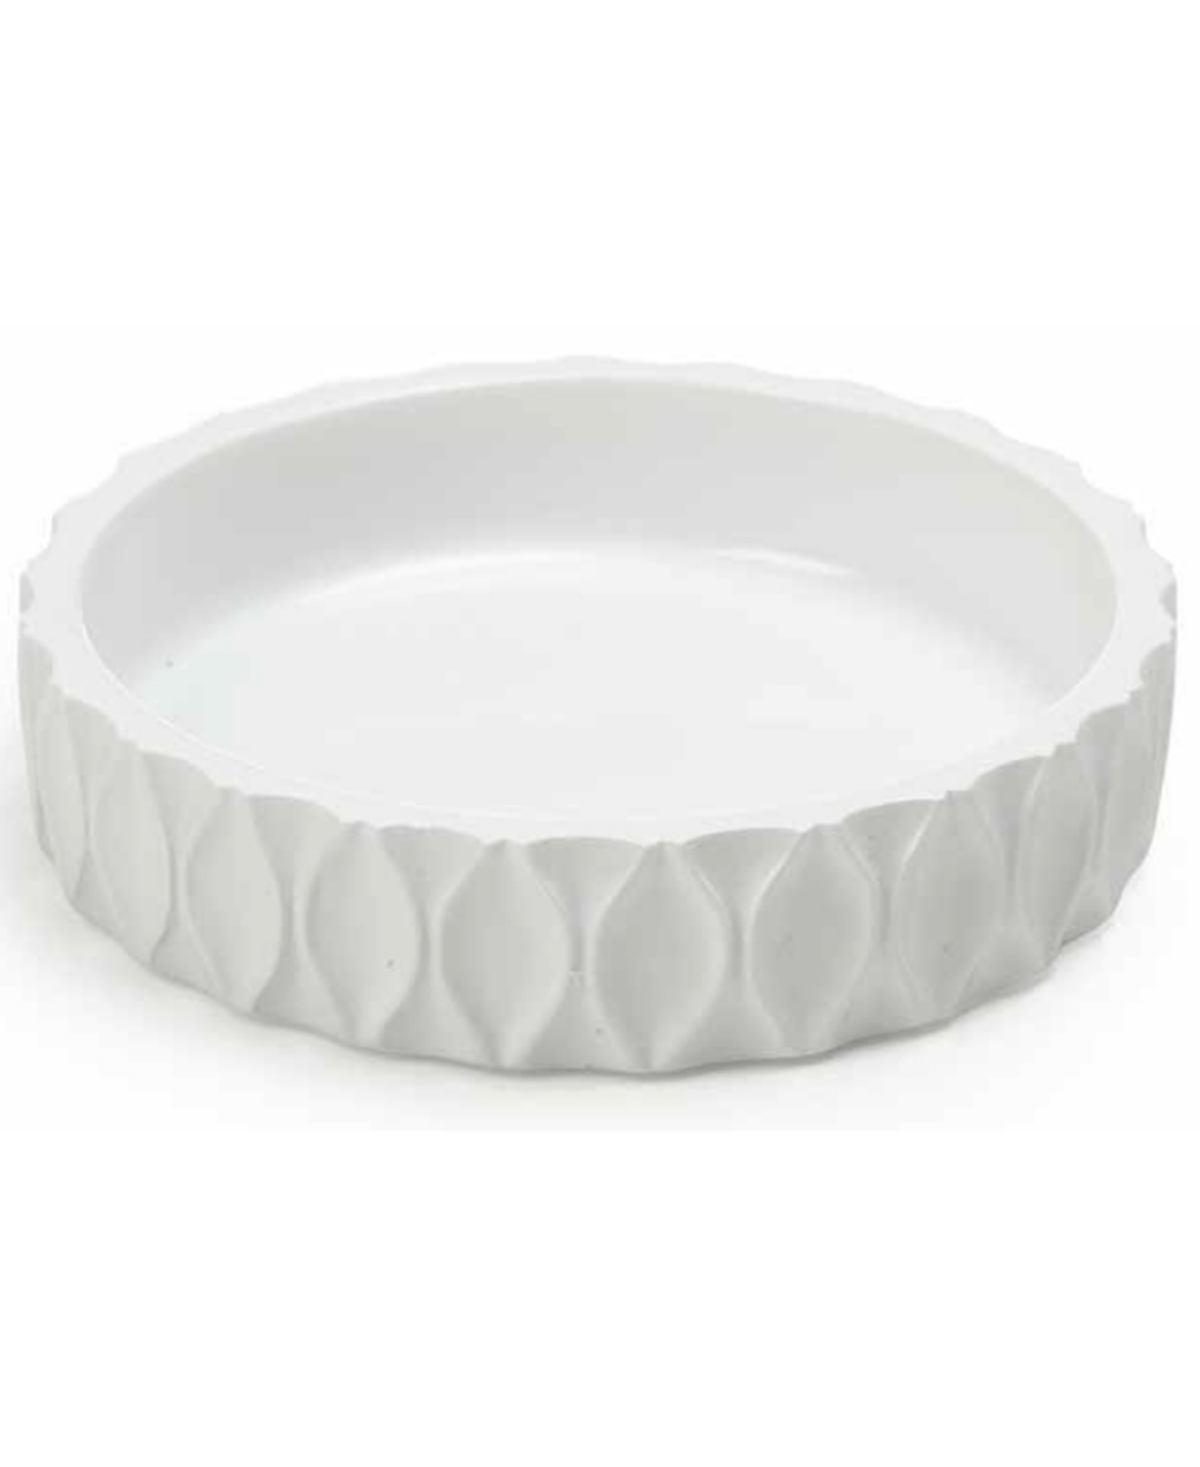 Wave Soap Dish - White